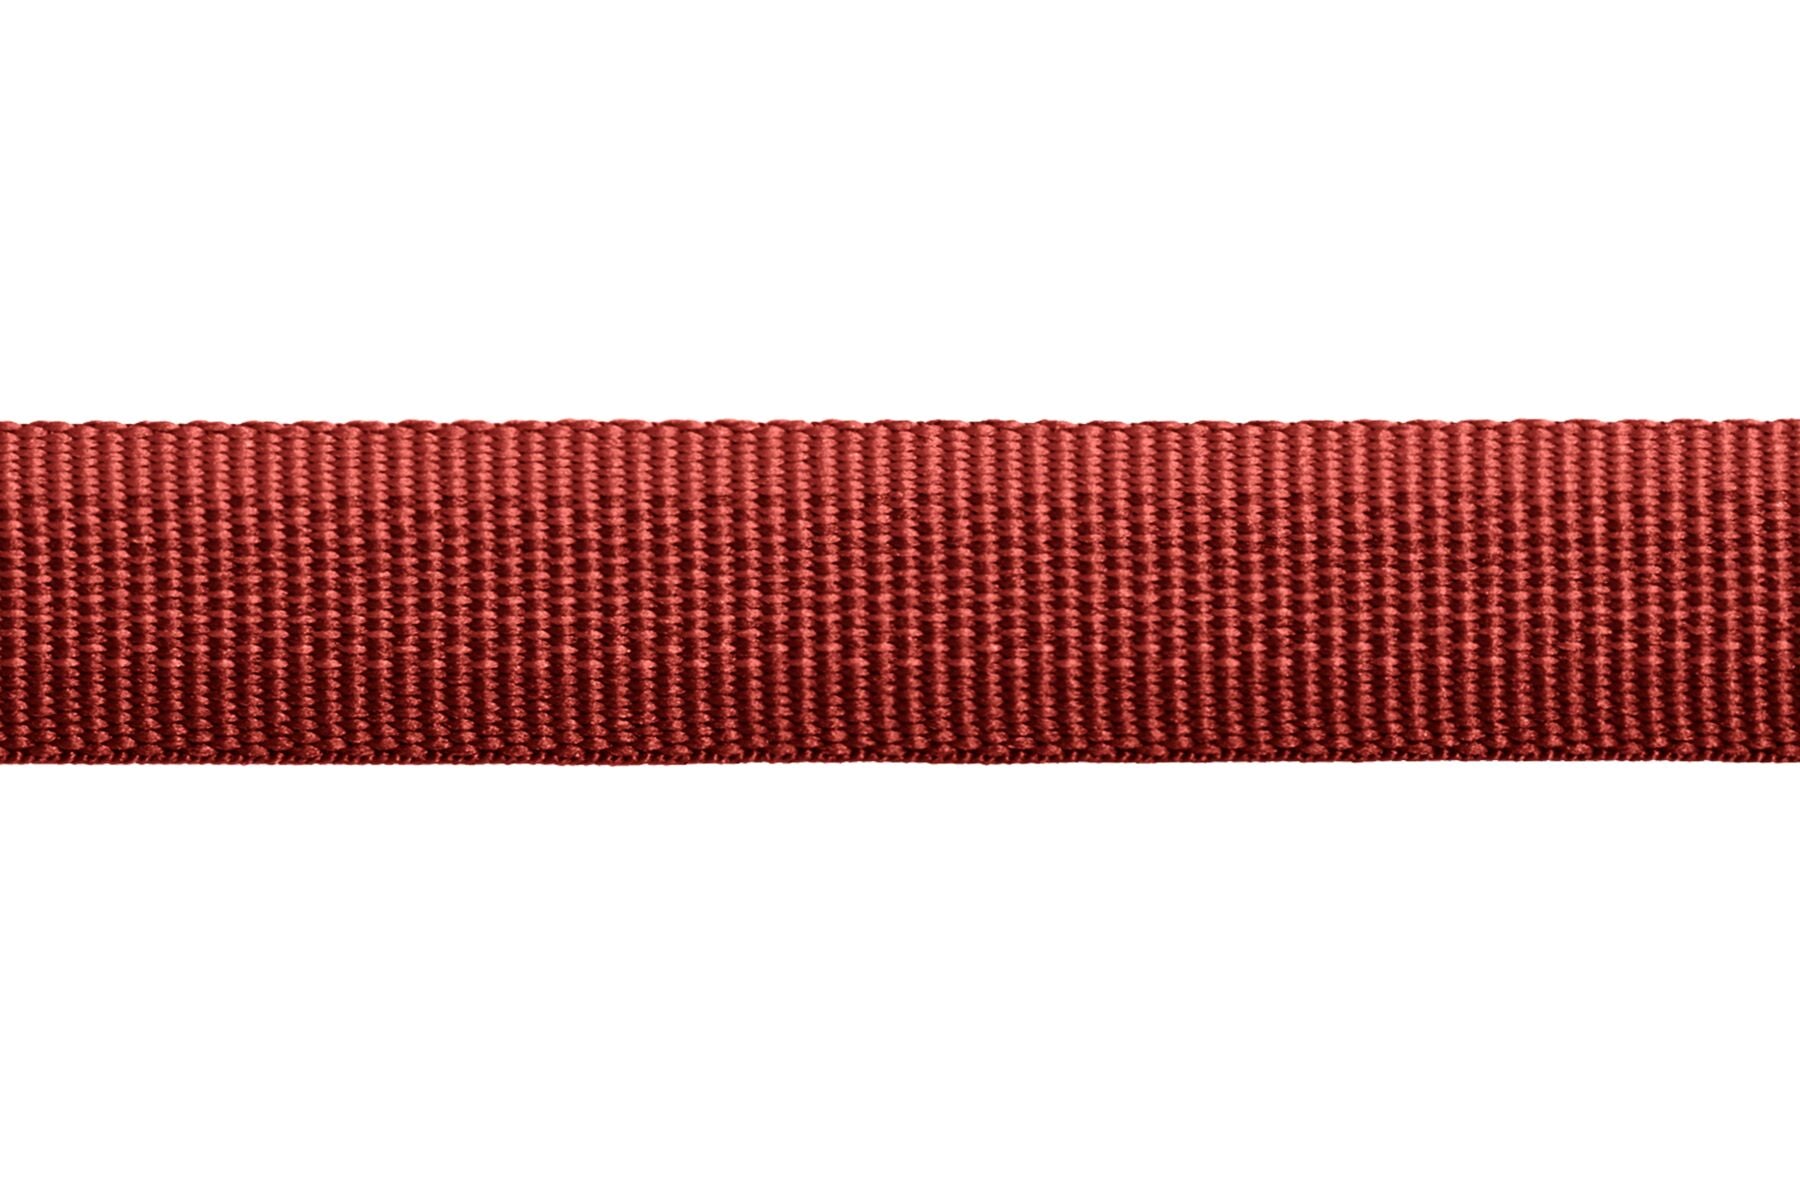 Collar para Perros Modelo Front Range Collar Rojo Arcilla (Red Clay) de Ruffwear